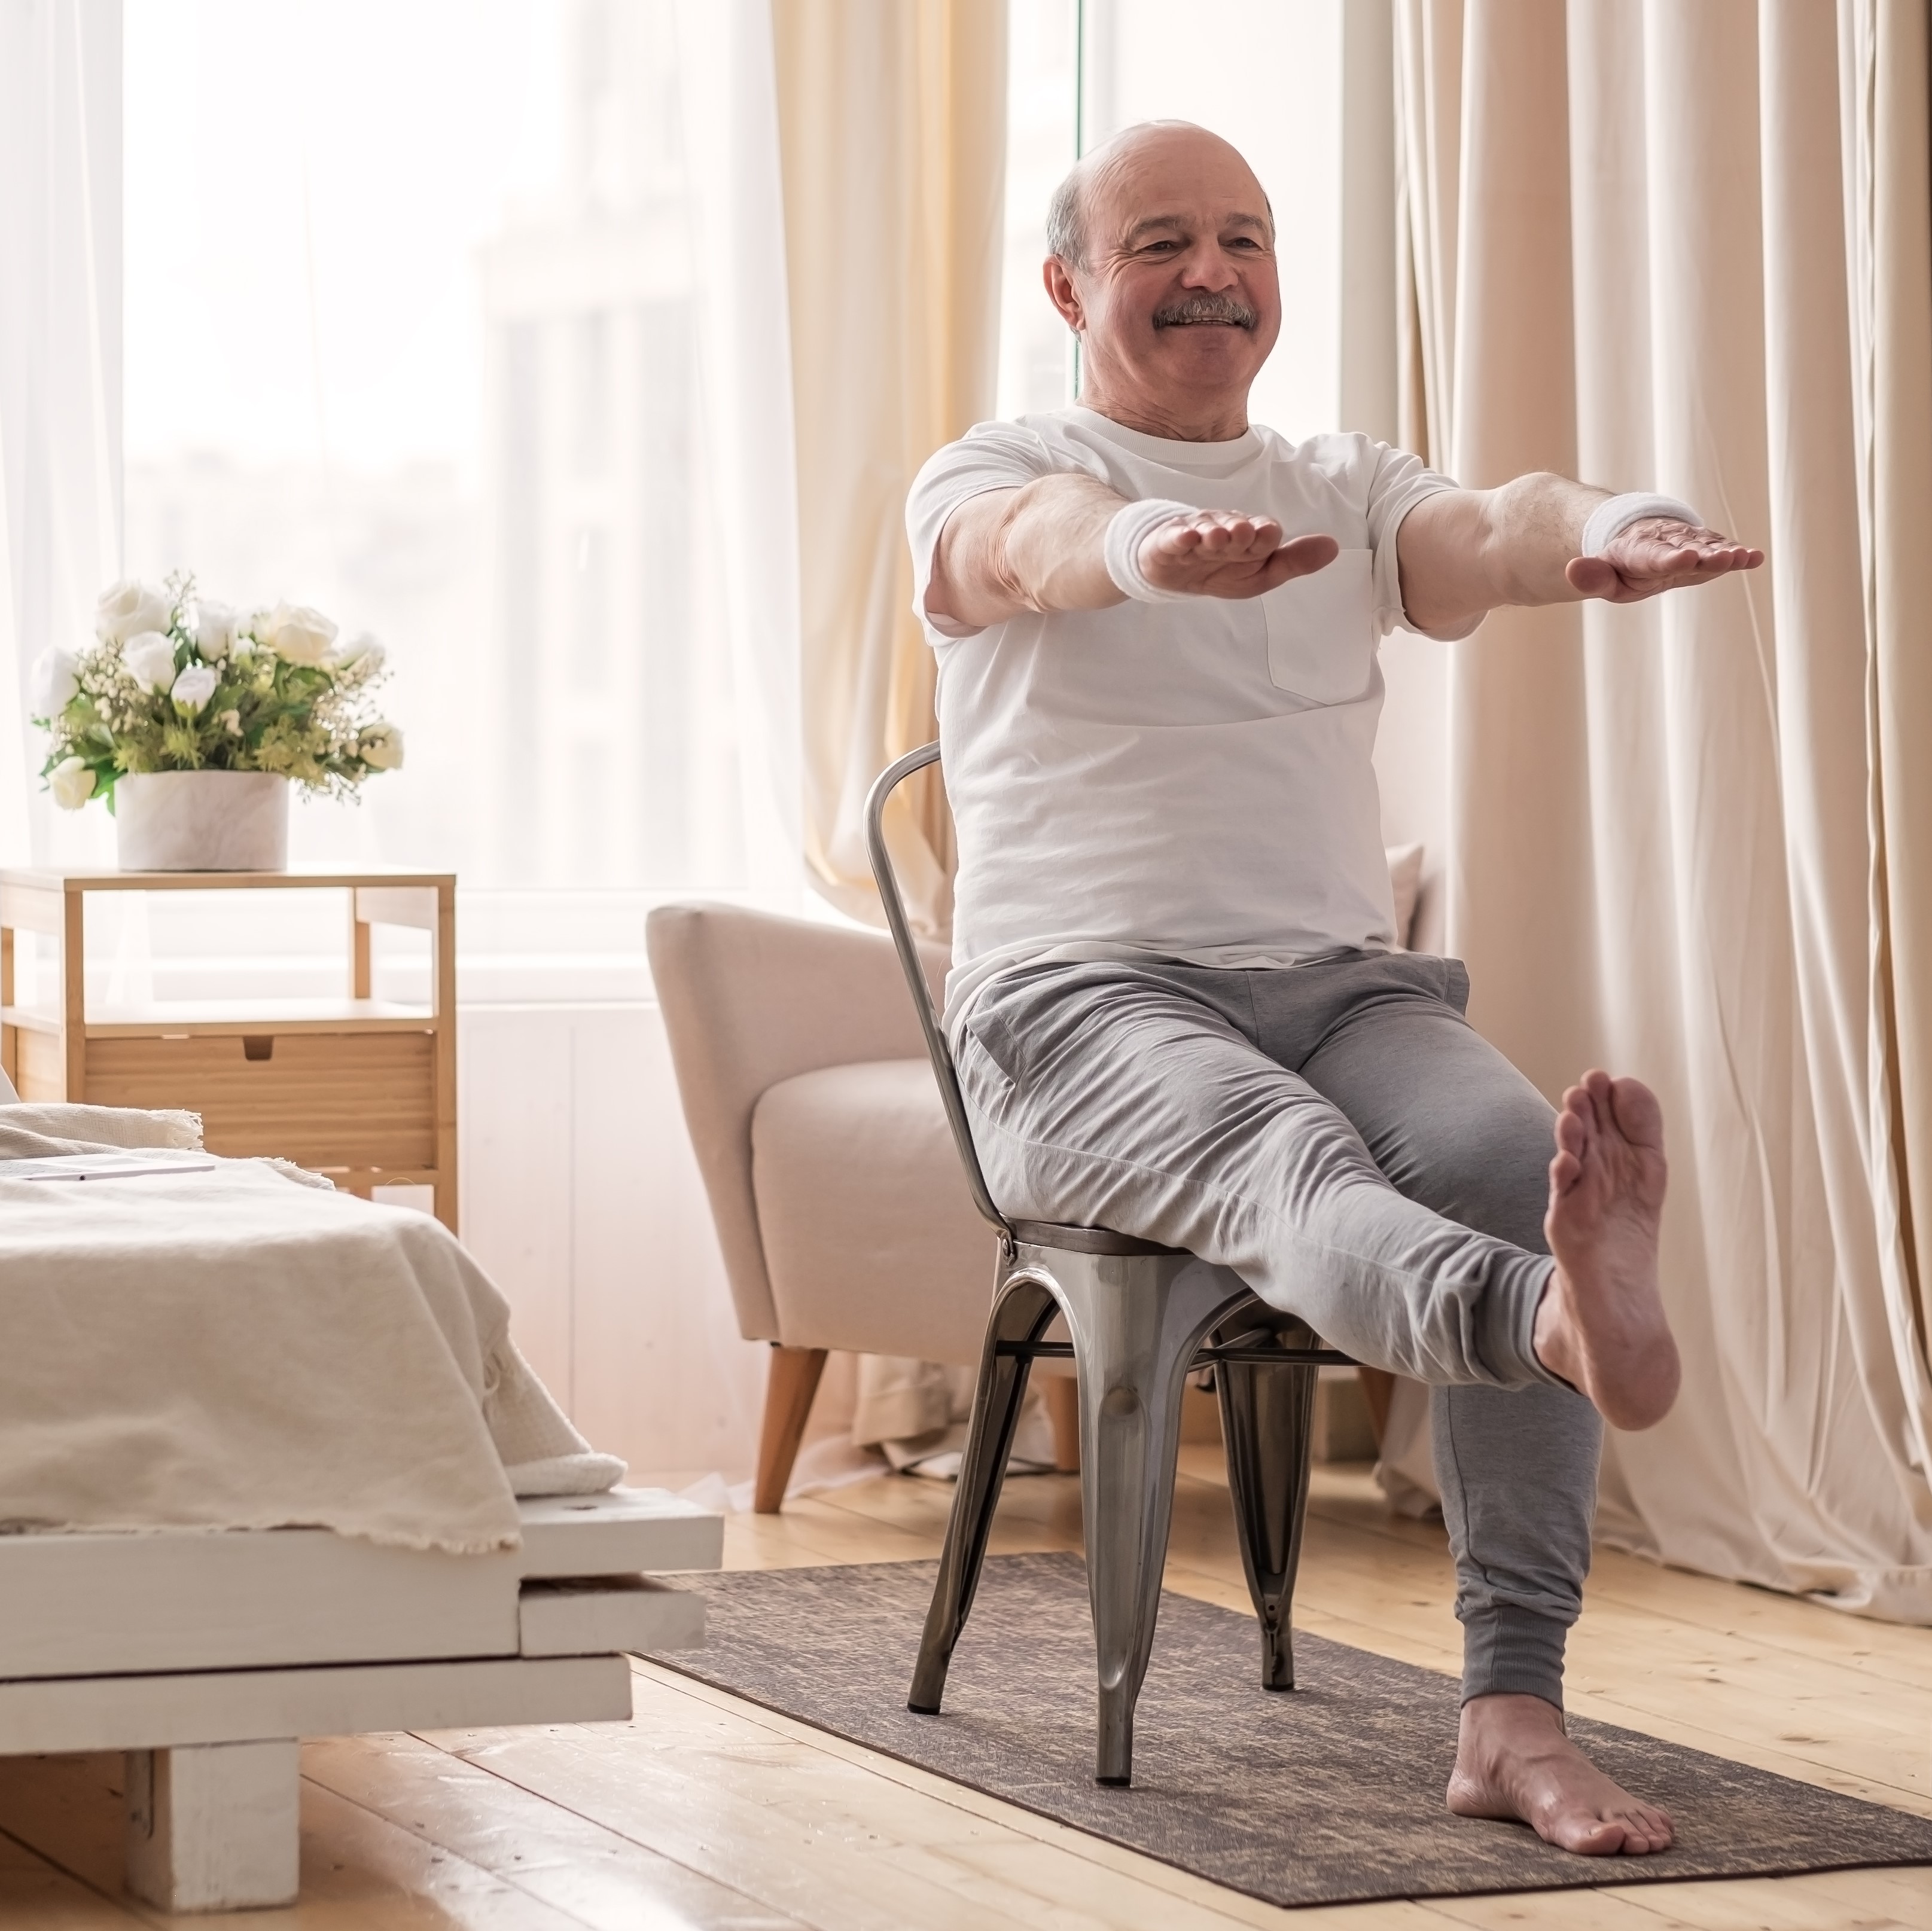 Older man doing chair exercises